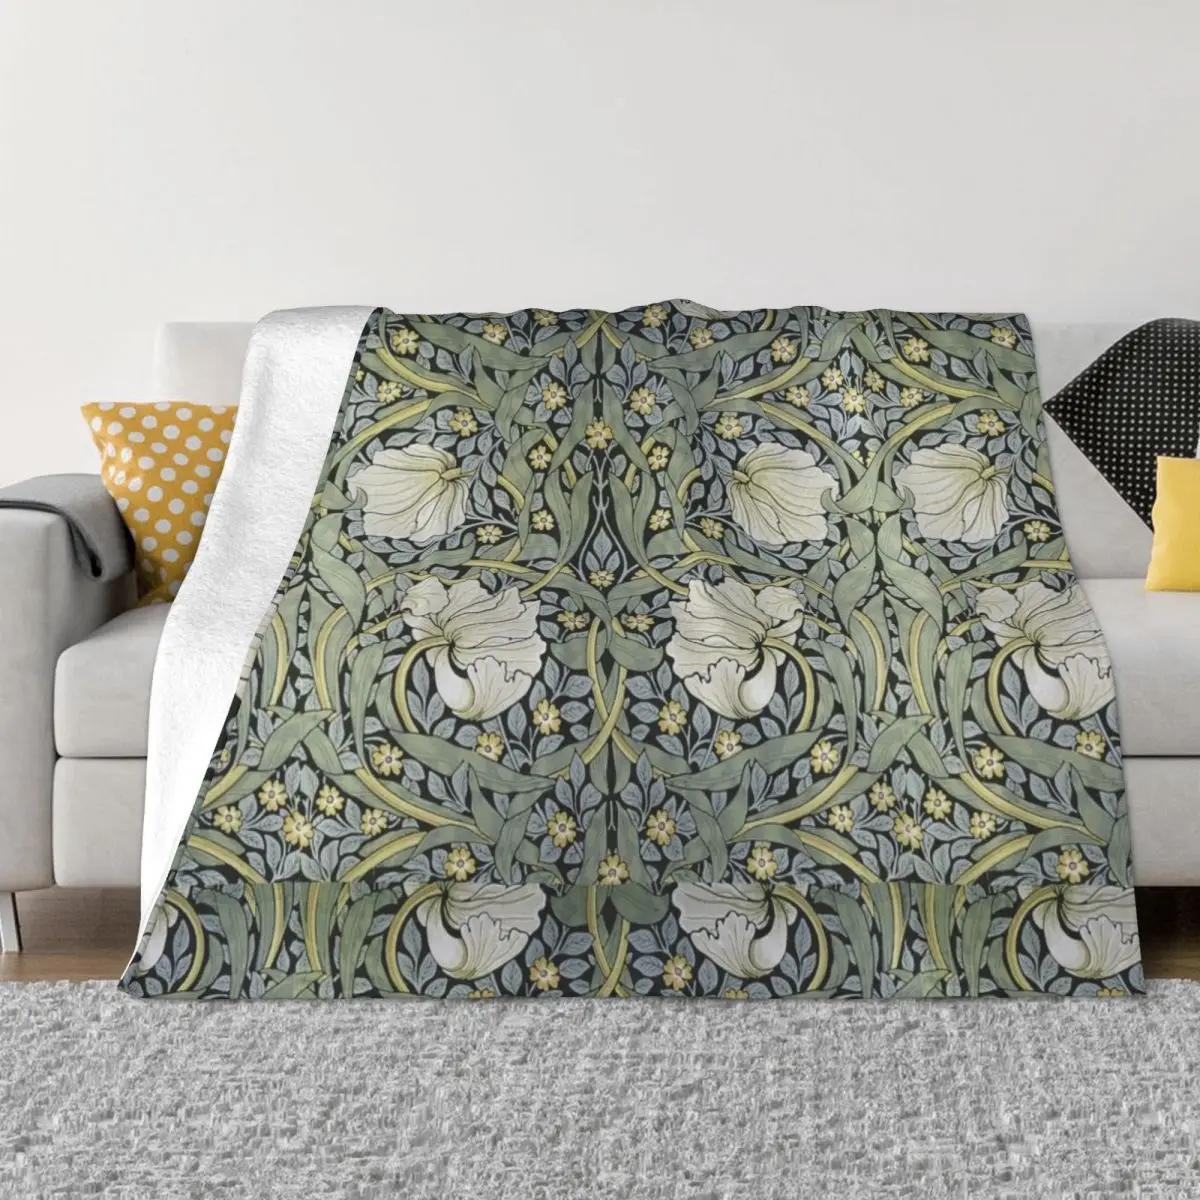 

William Morris - Pimpernel Design Throw Blanket Sleeping Bag Blanket Blankets For Bed Beach Blanket